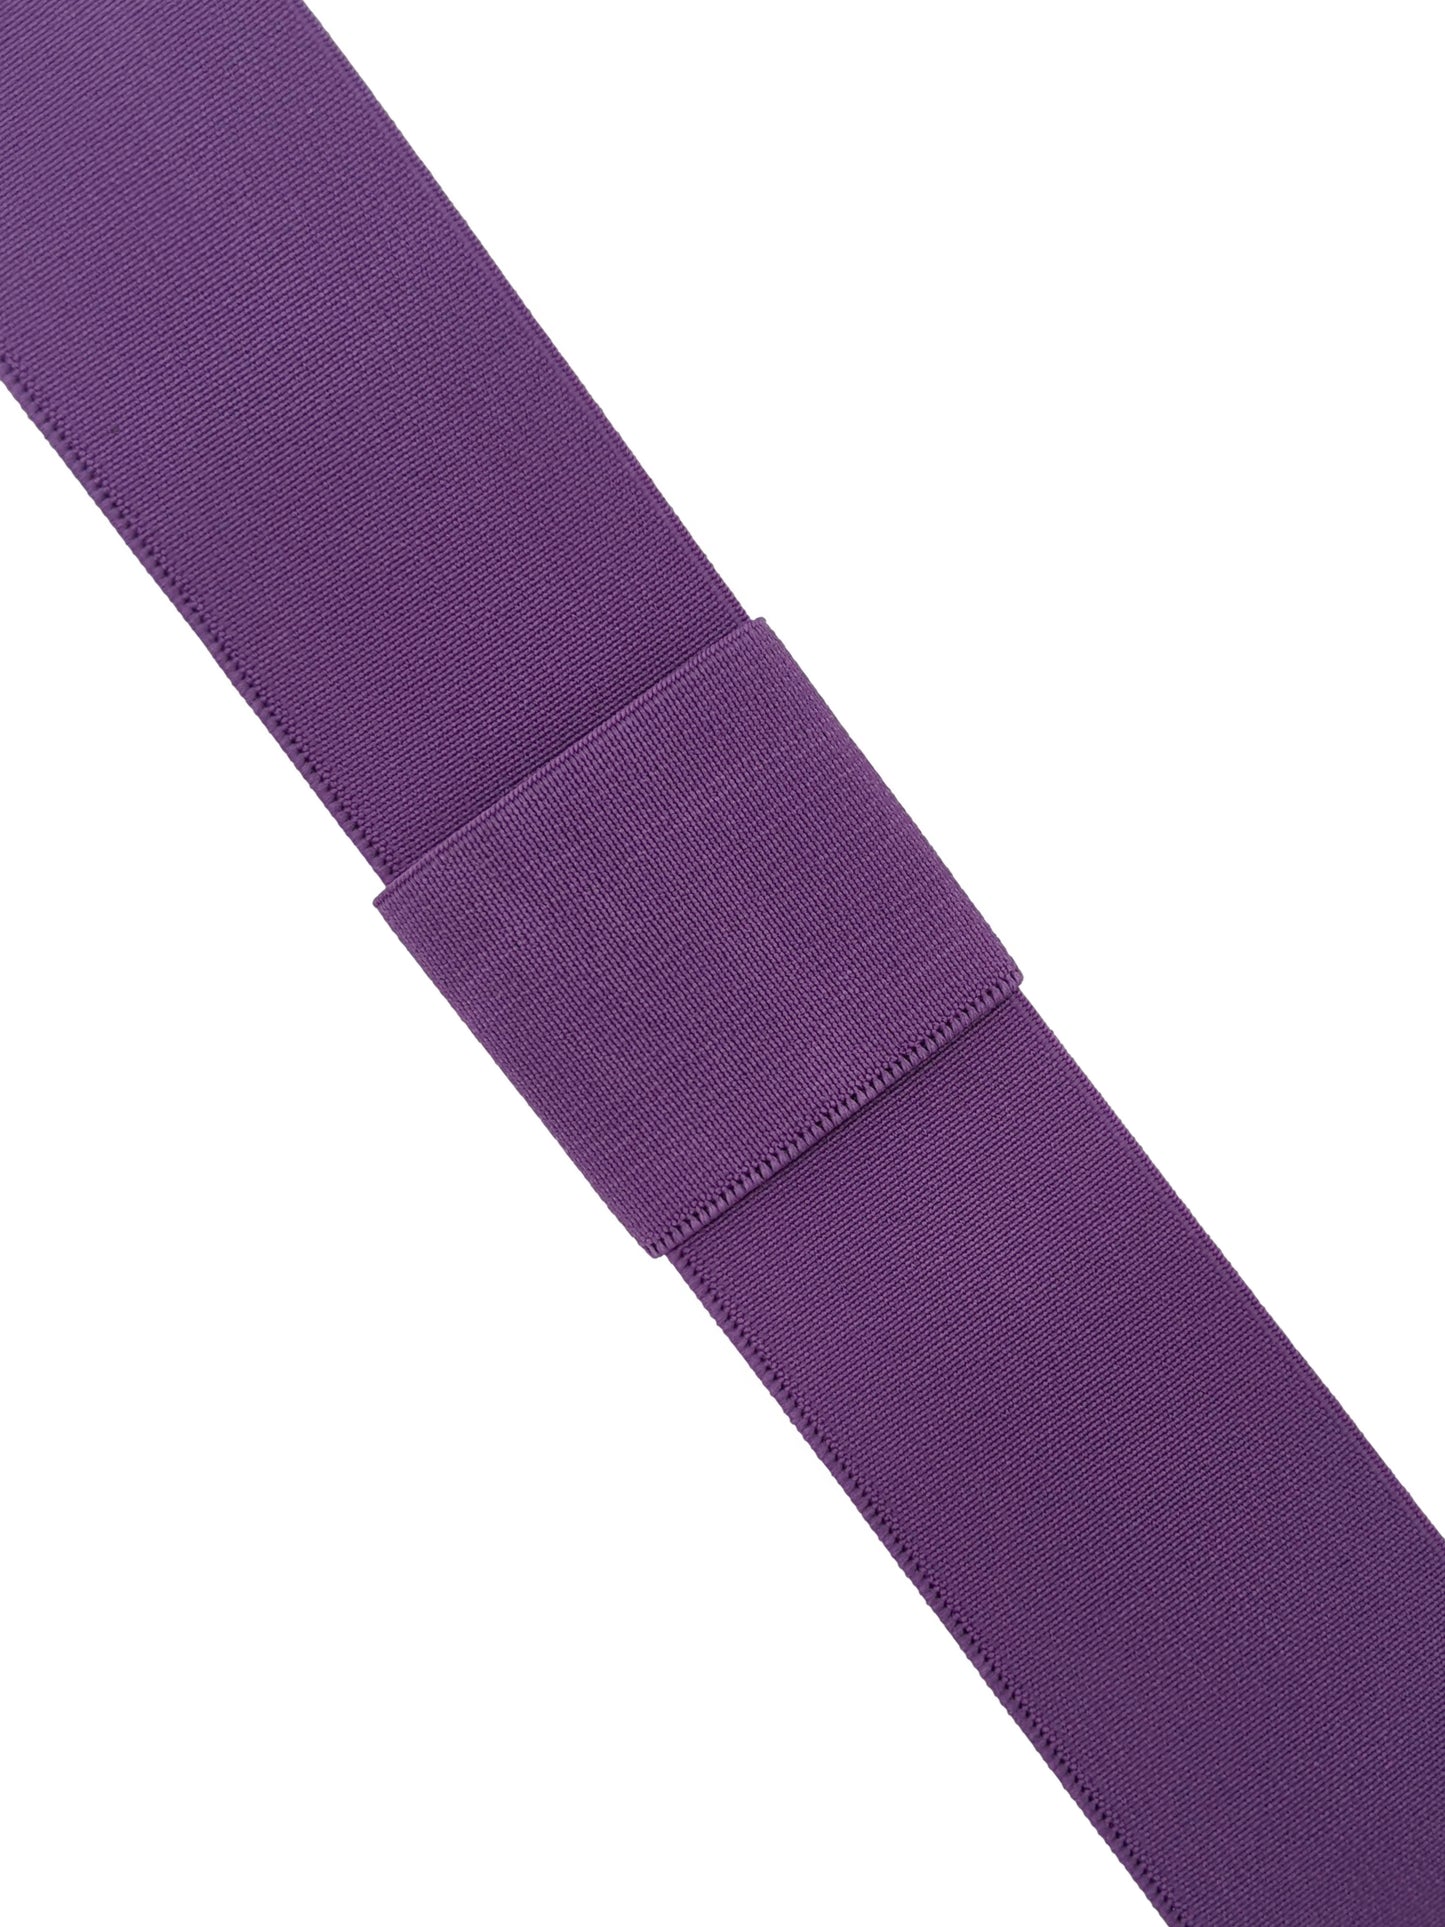 Interchangeable Panama Band - Purple